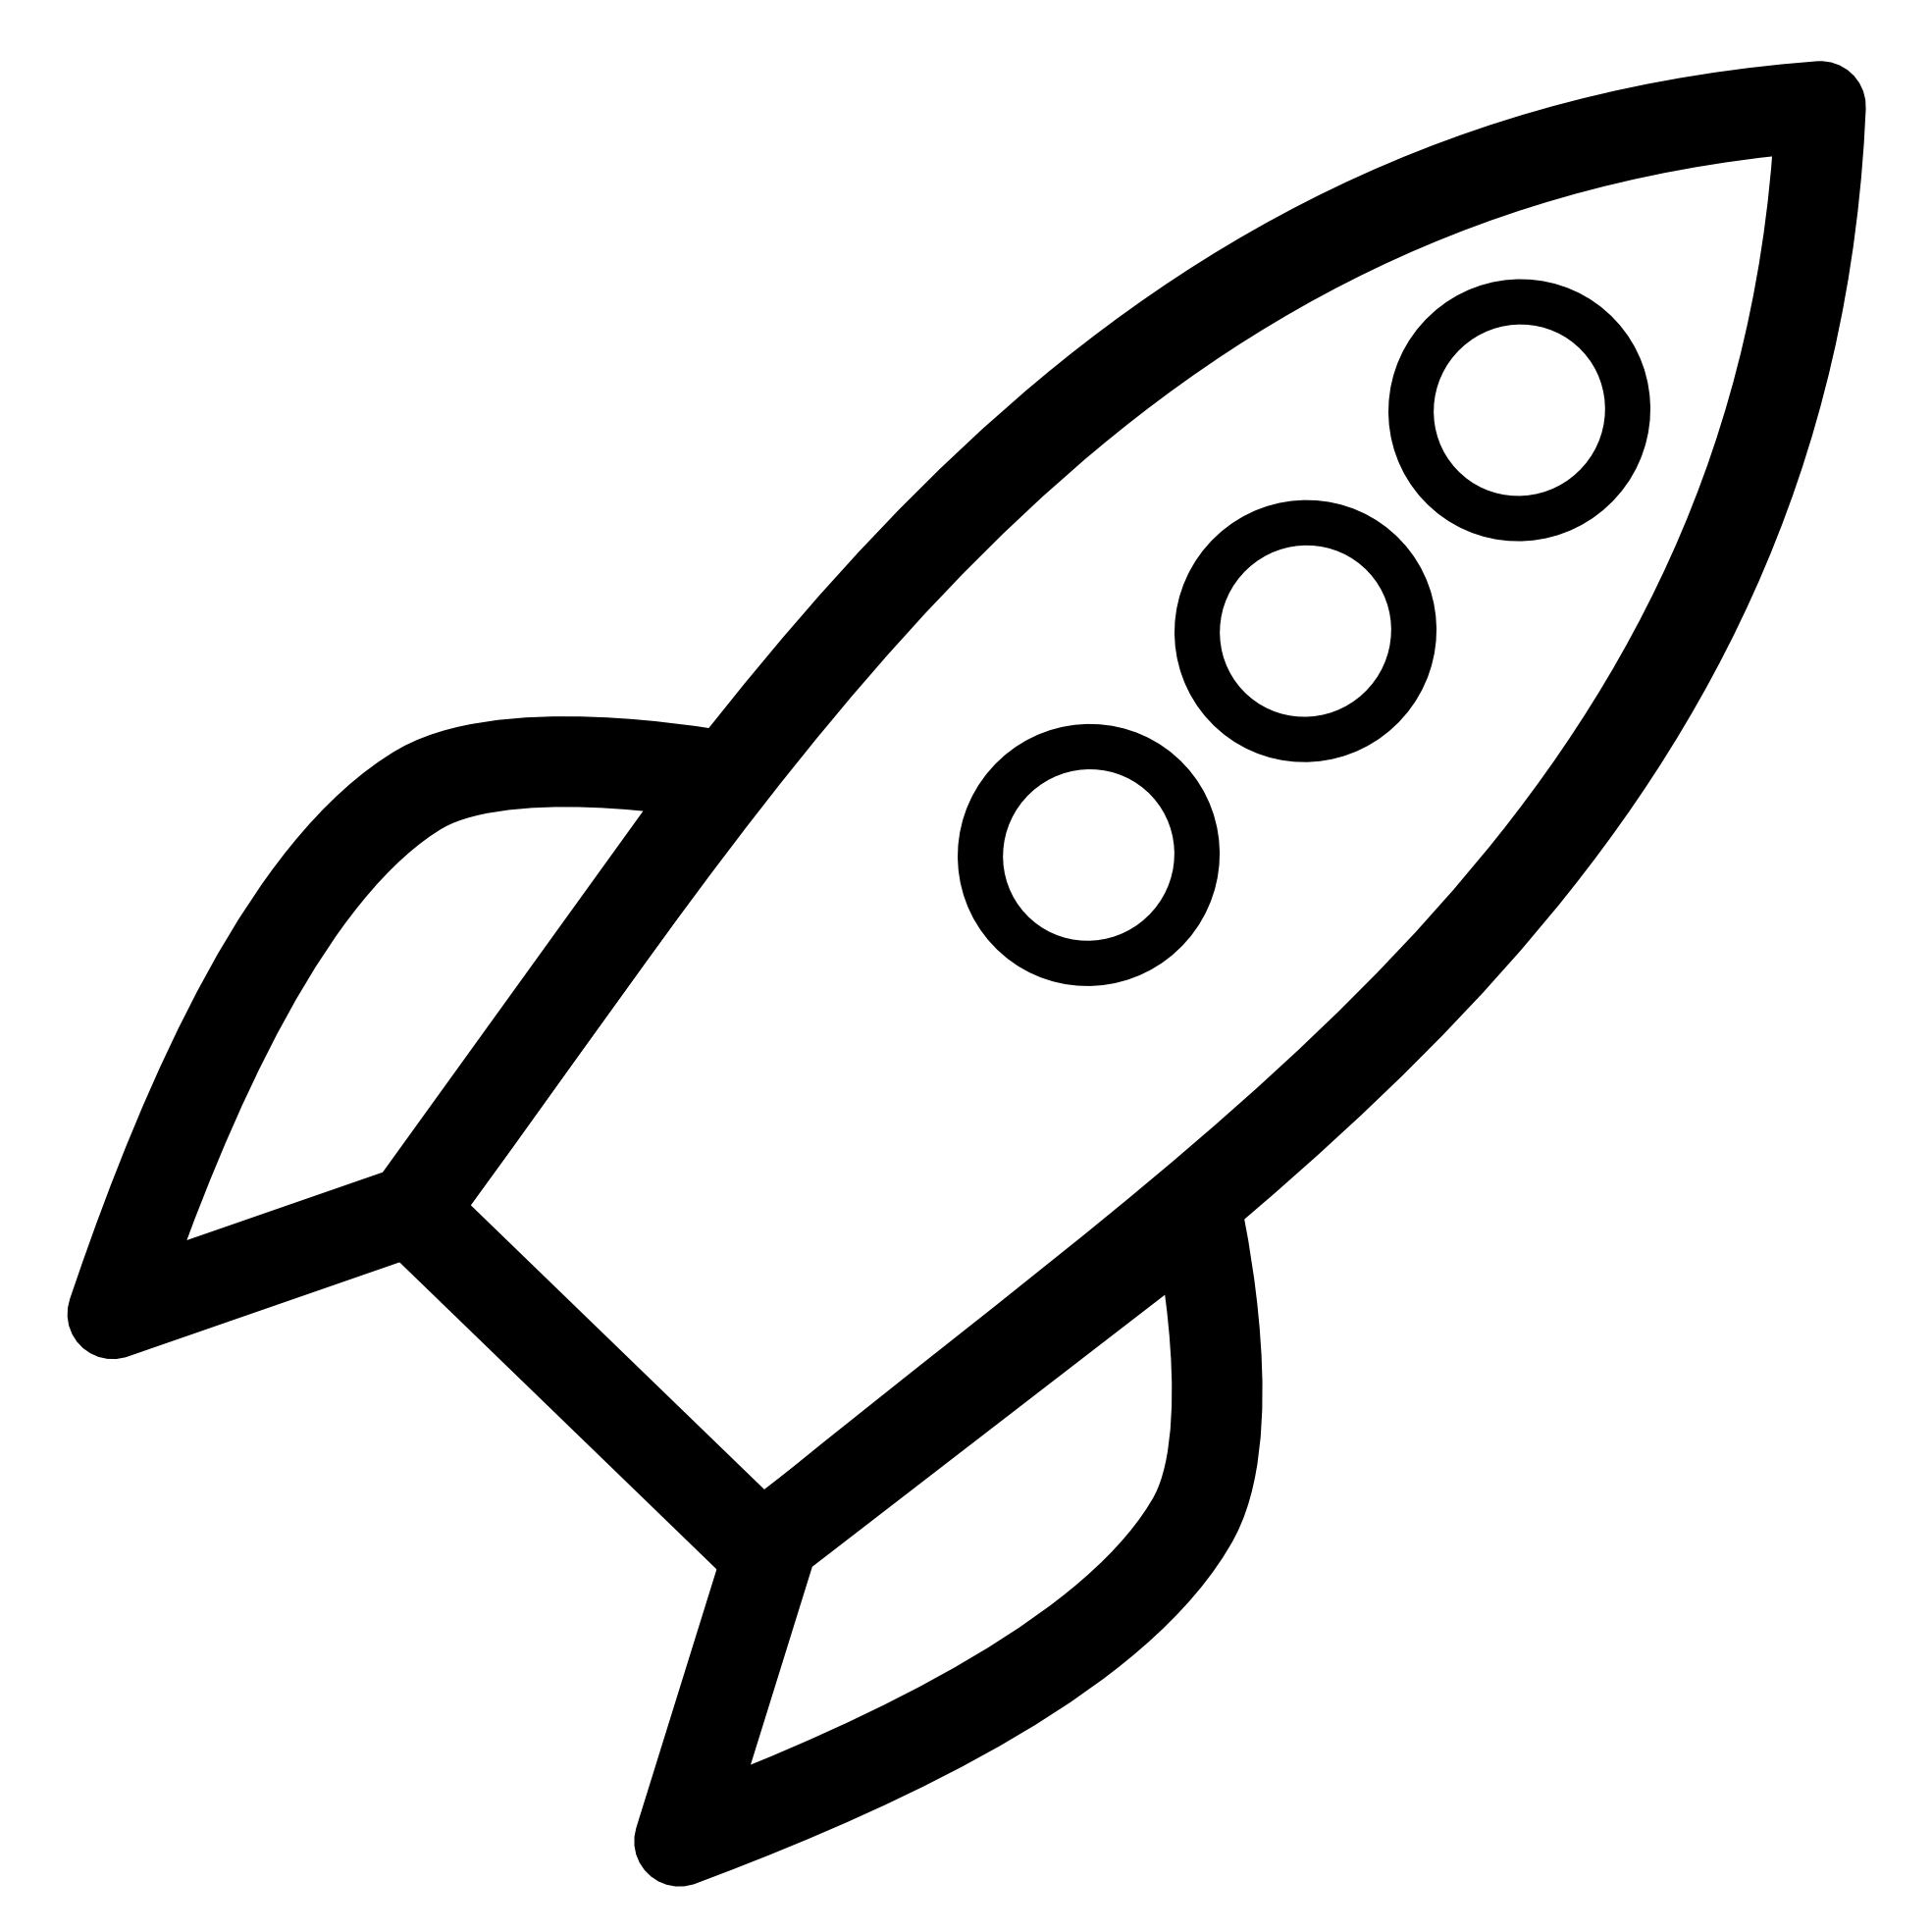 Rocket black and white. Spaceship clipart spacerocket